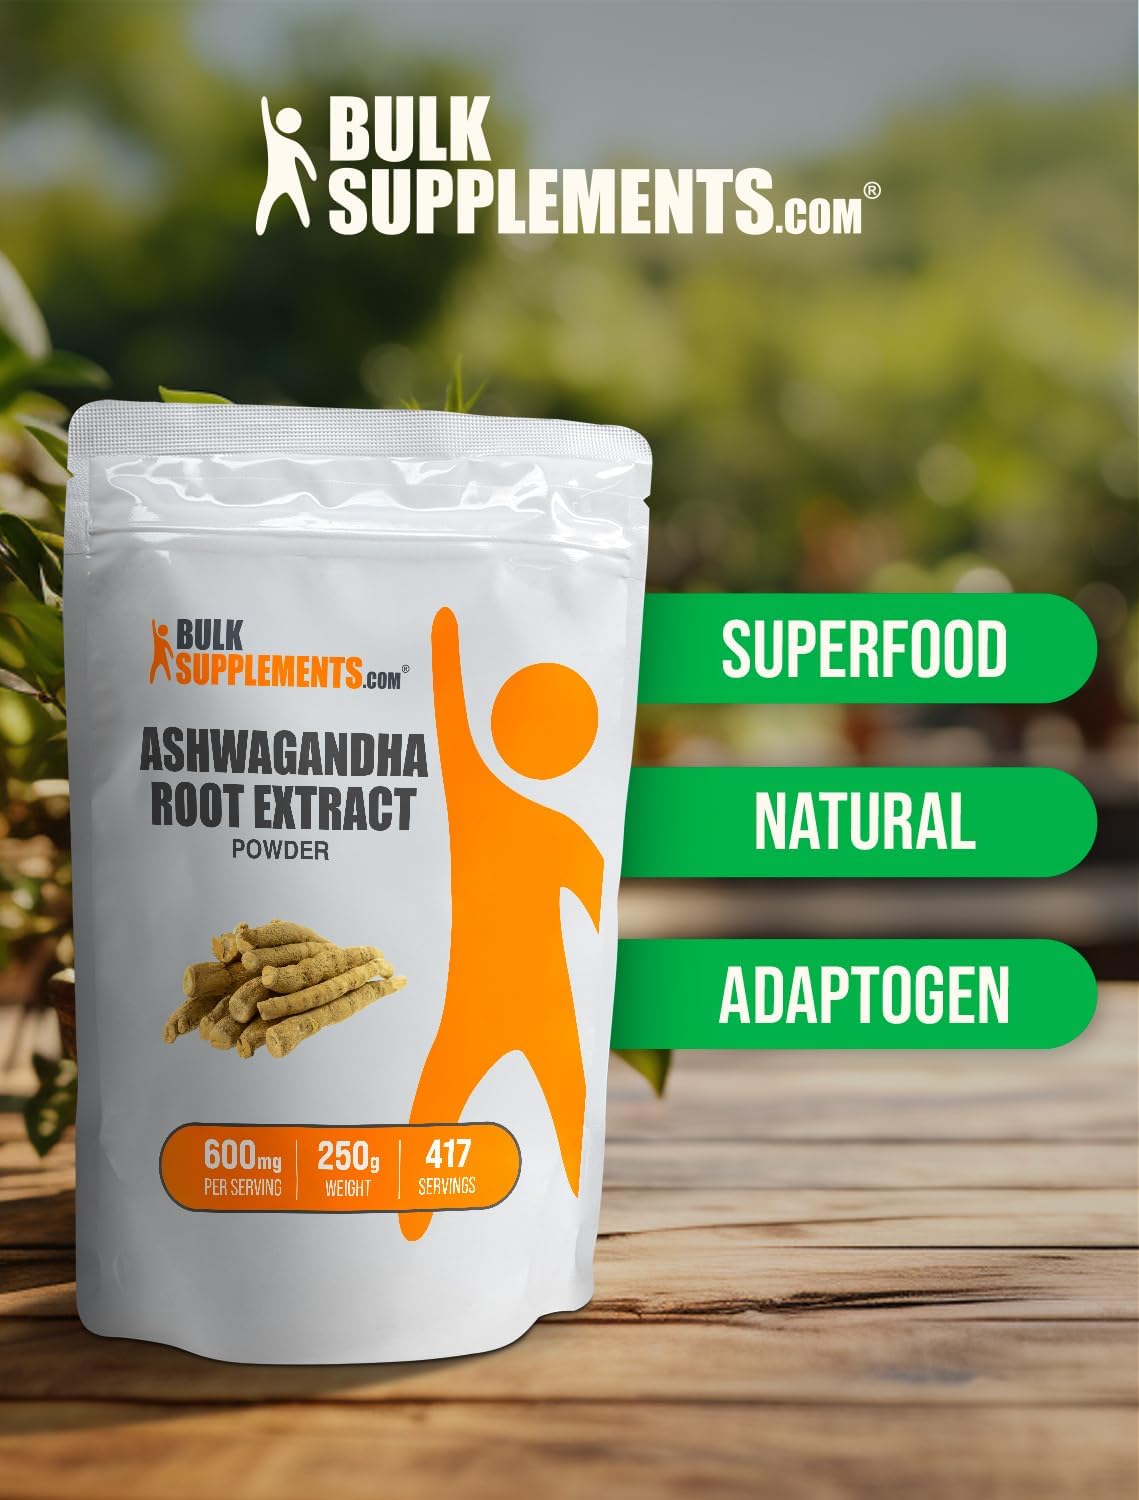 BULKSUPPLEMENTS.COM Ashwagandha Root Extract Powder - Ashwagandha Supplement, Ashwagandha Powder - from Ashwagandha Root - Vegan & Gluten Free, 600mg per Serving, 250g (8.8 oz) (Pack of 1) : Health & Household